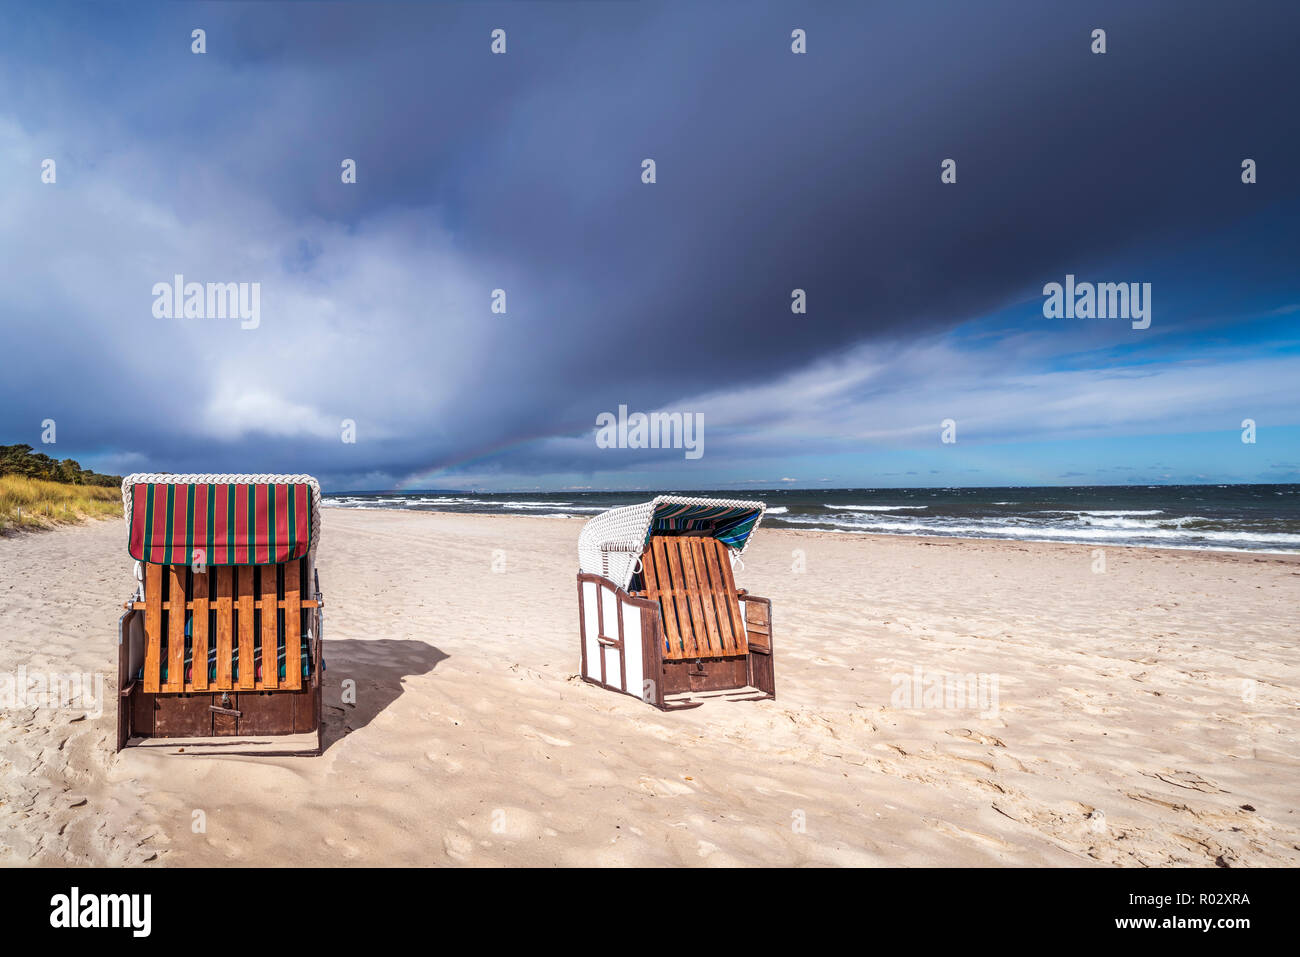 Sedie da spiaggia sull'isola di Rügen, Sellin/Baabe, Germania | Strandkörbe auf der Insel Rügen, Sellin/Baabe Foto Stock